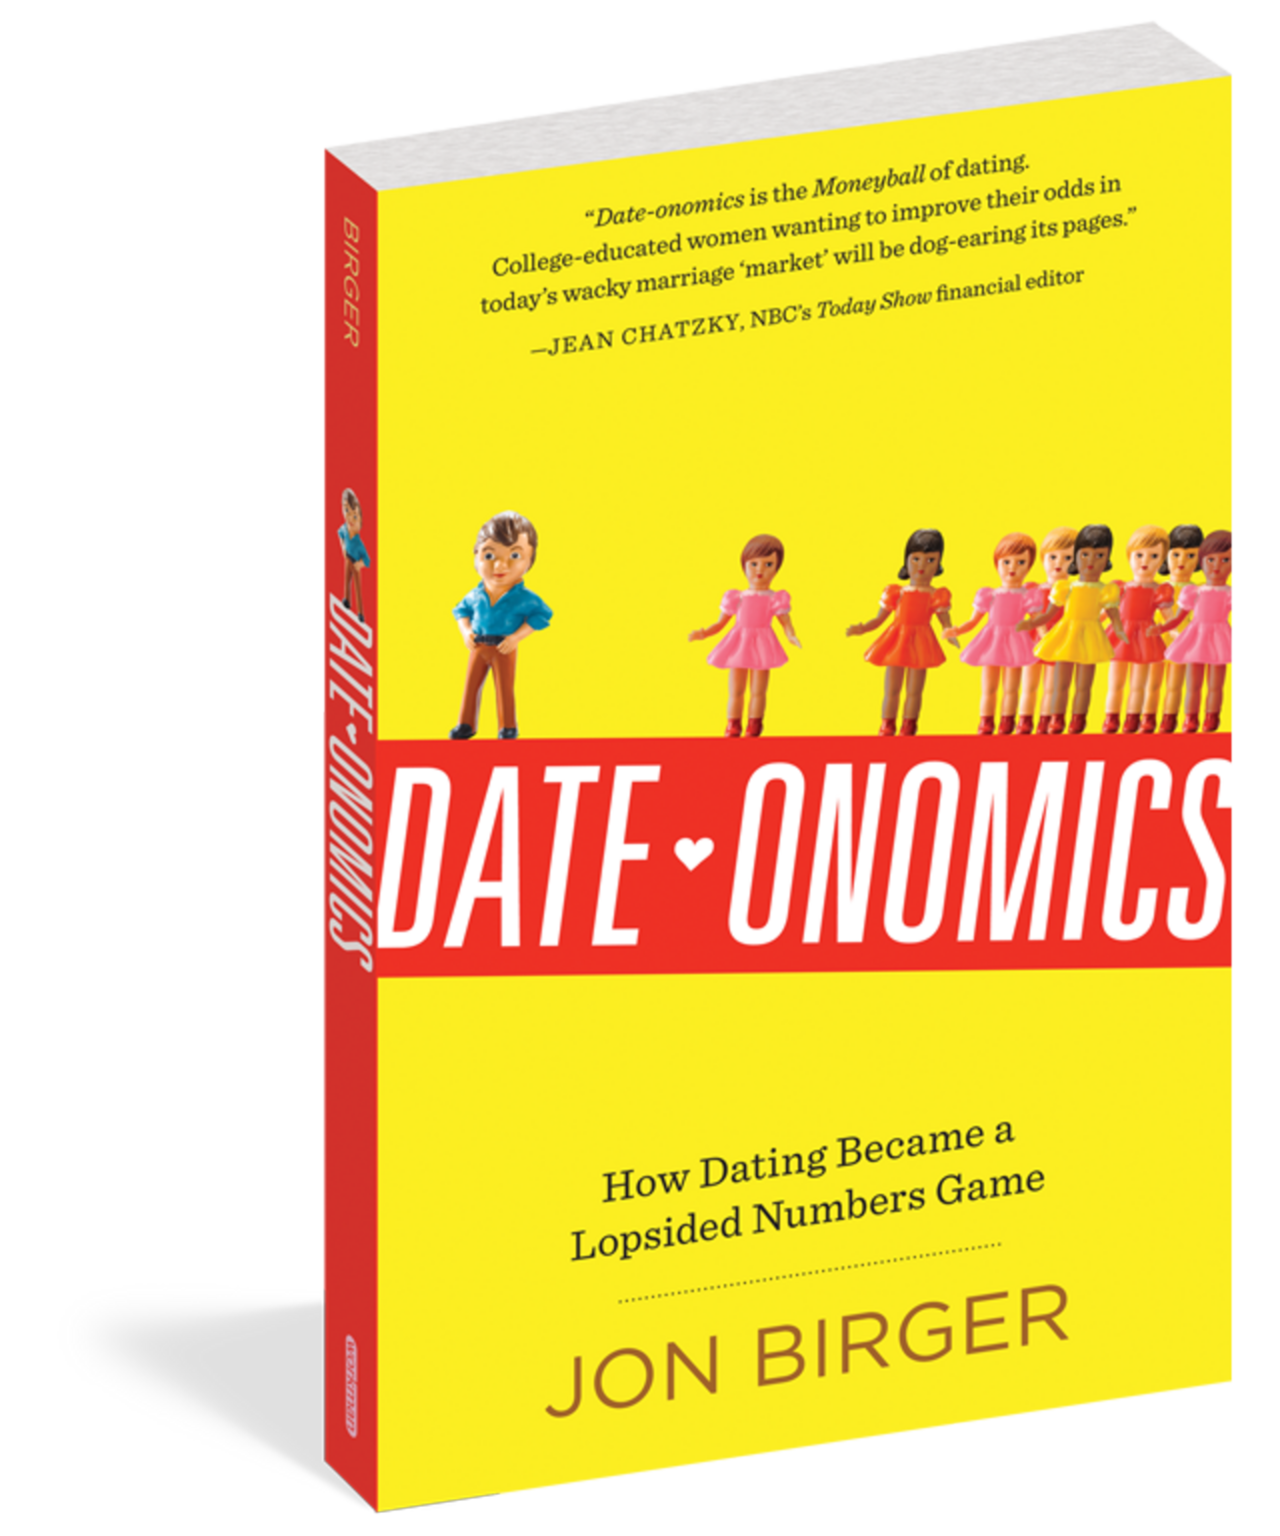 Date Onomics作者jon Birger关于hookup文化和美国的 男人短缺